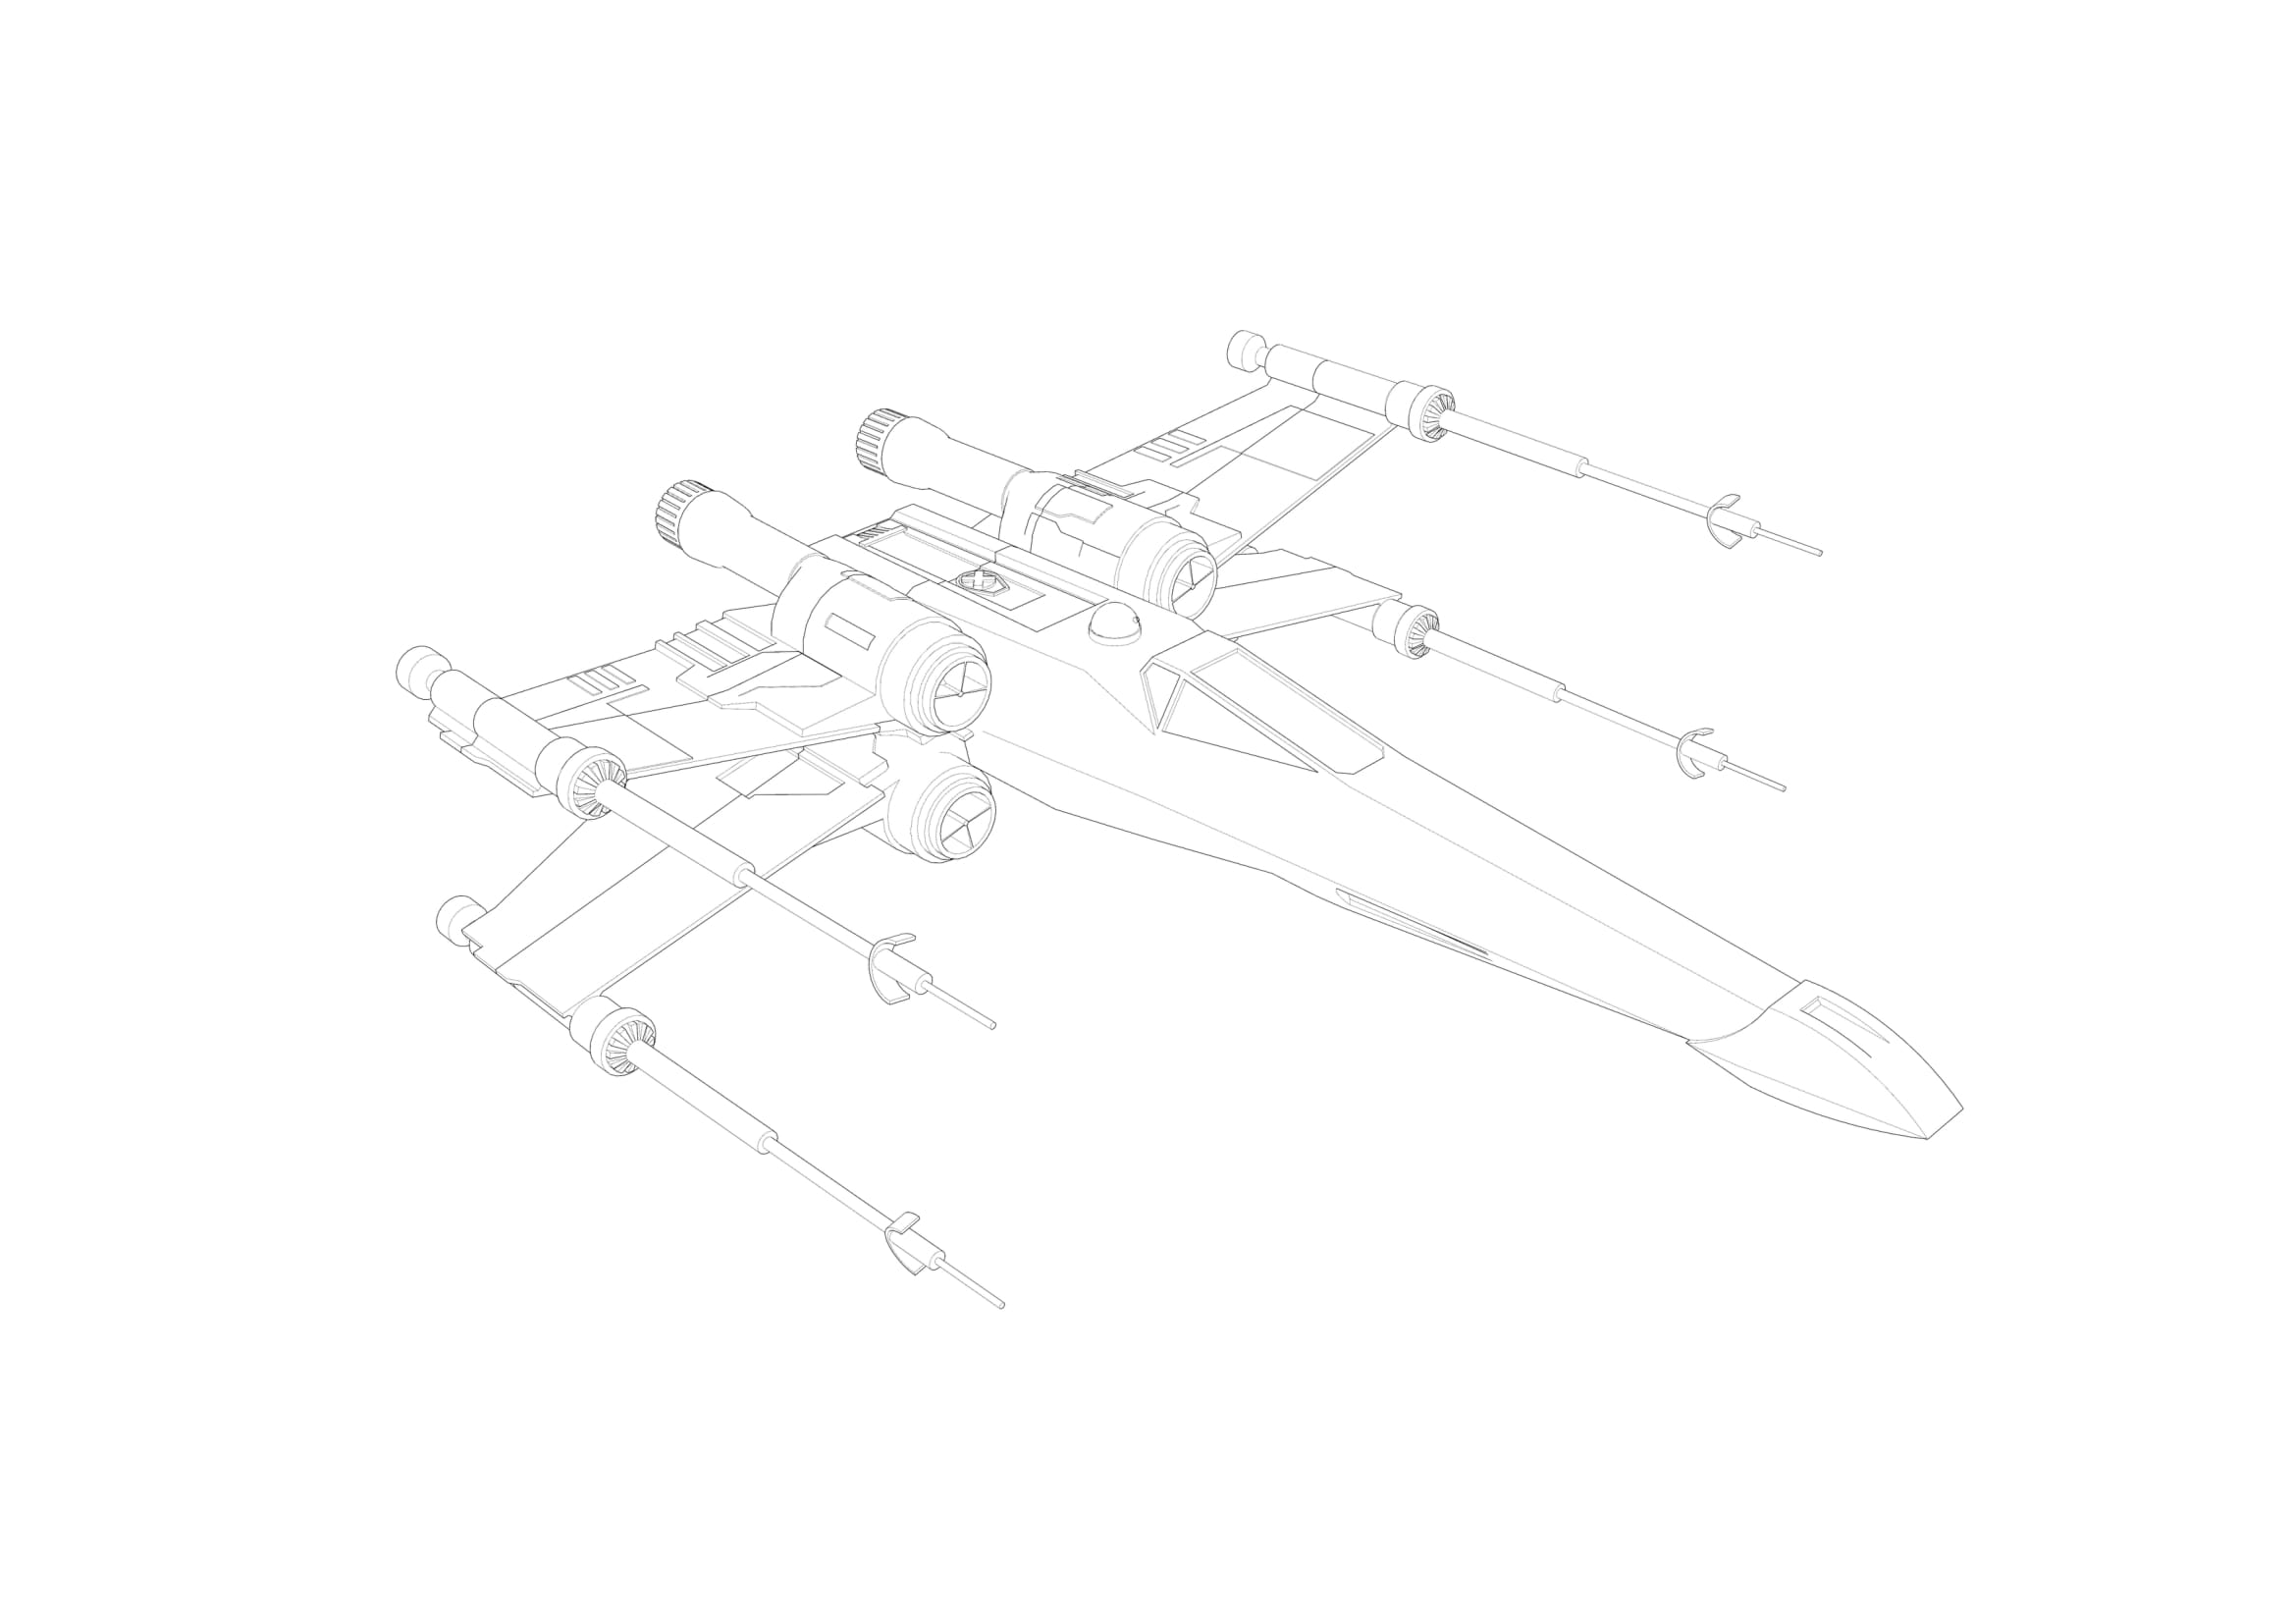 X-wing Starfighter